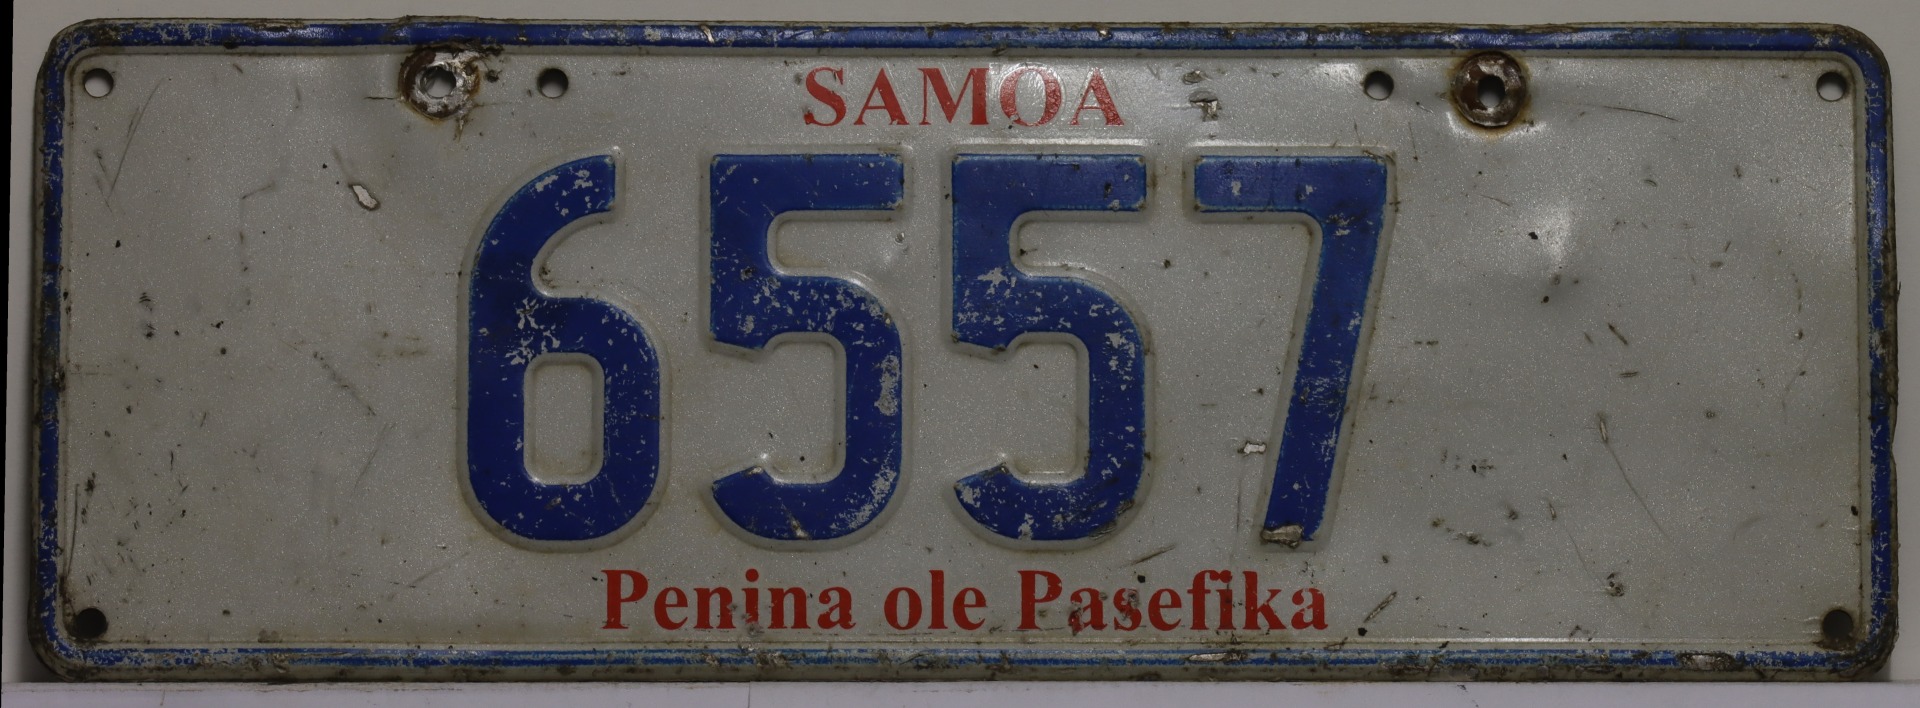 Samoa_Pass2000_JEC.jpg